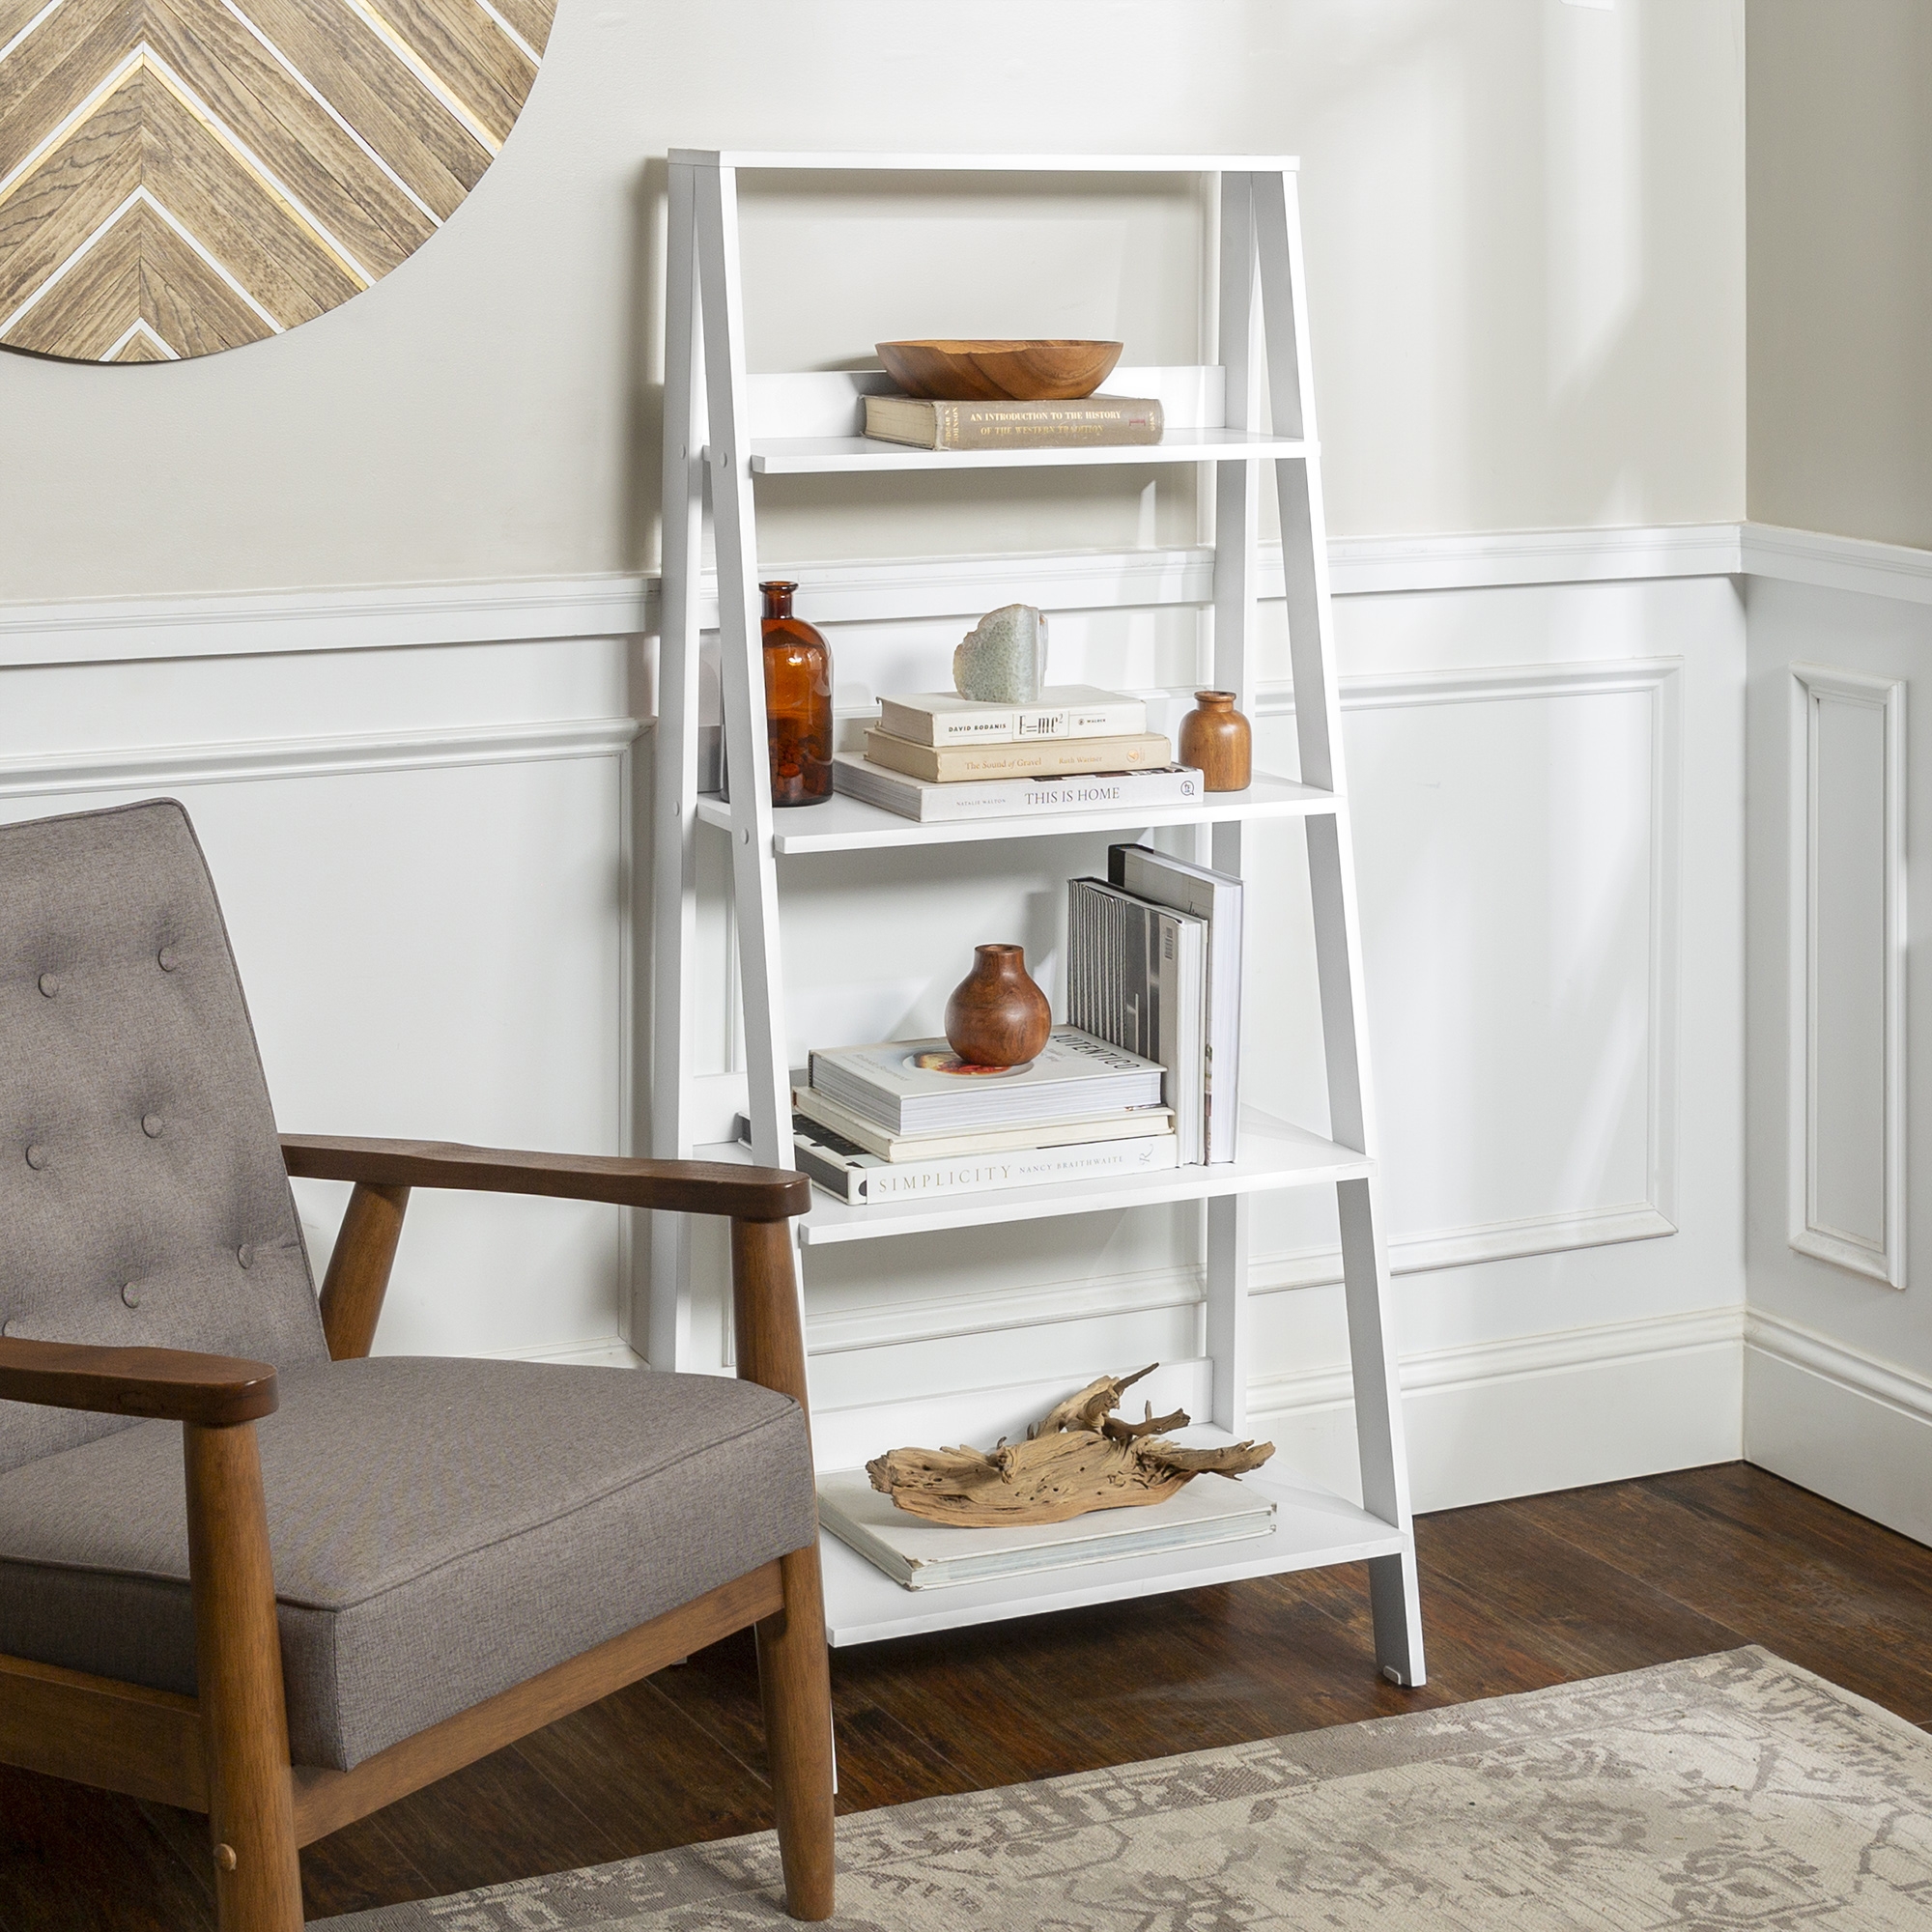 55" Modern Wood Ladder Bookshelf - White - Image 4